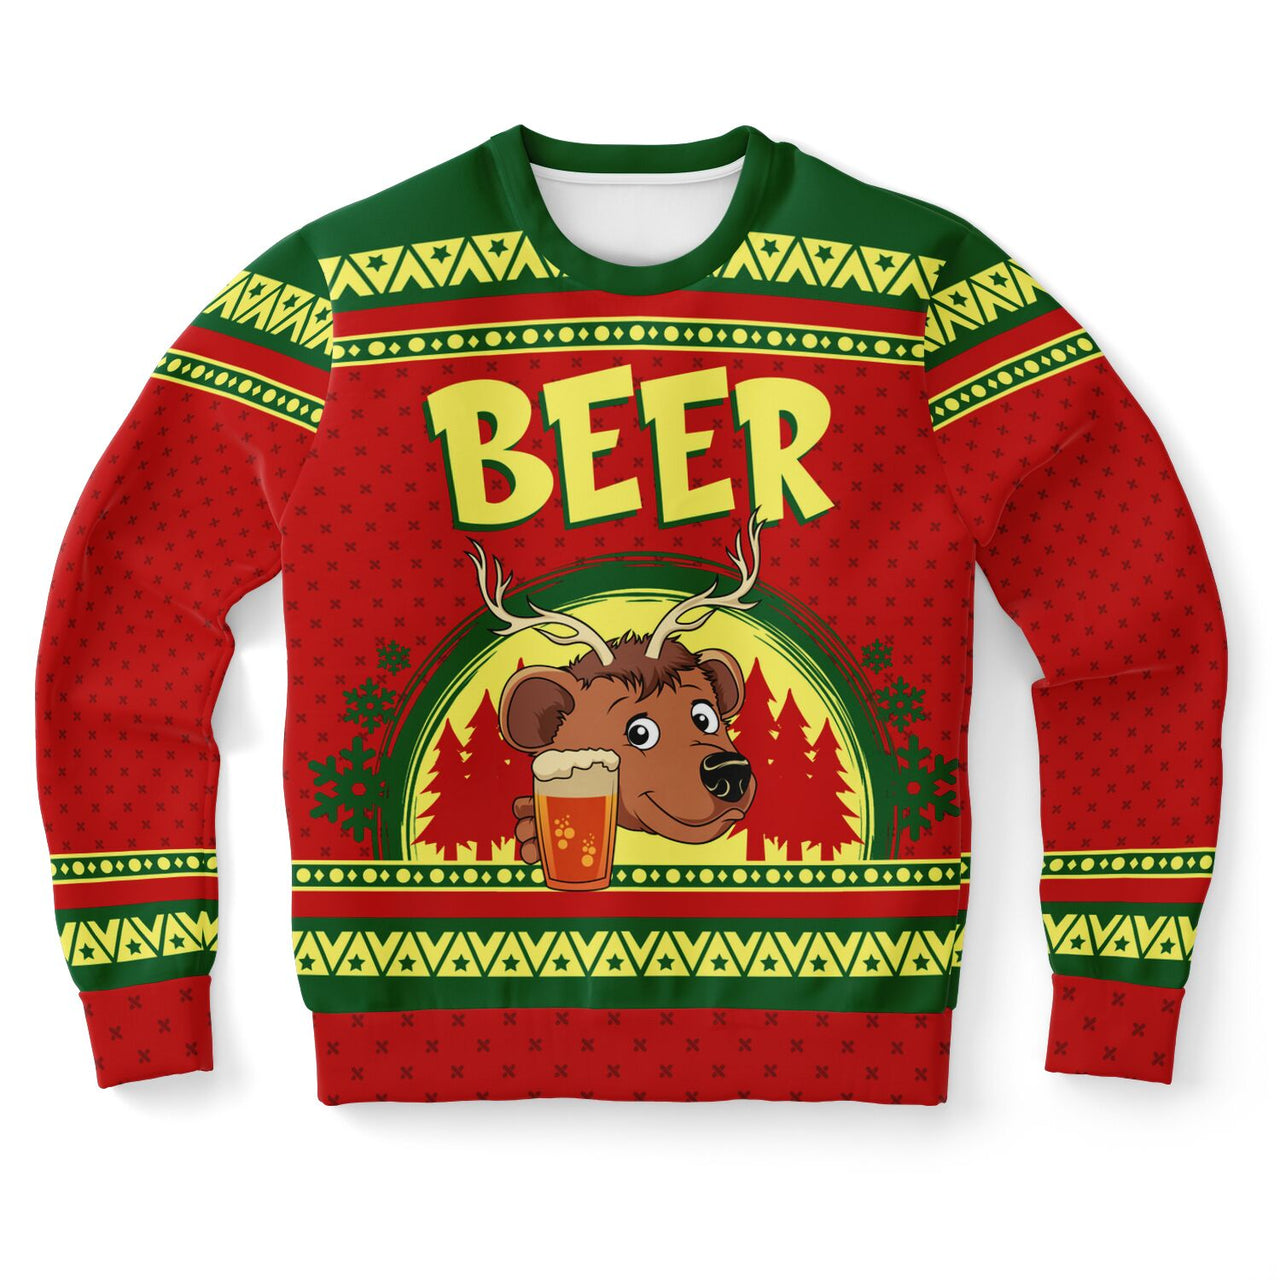 Beer Deer Ugly Christmas Fashion Sweatshirt with All-Over-Print.